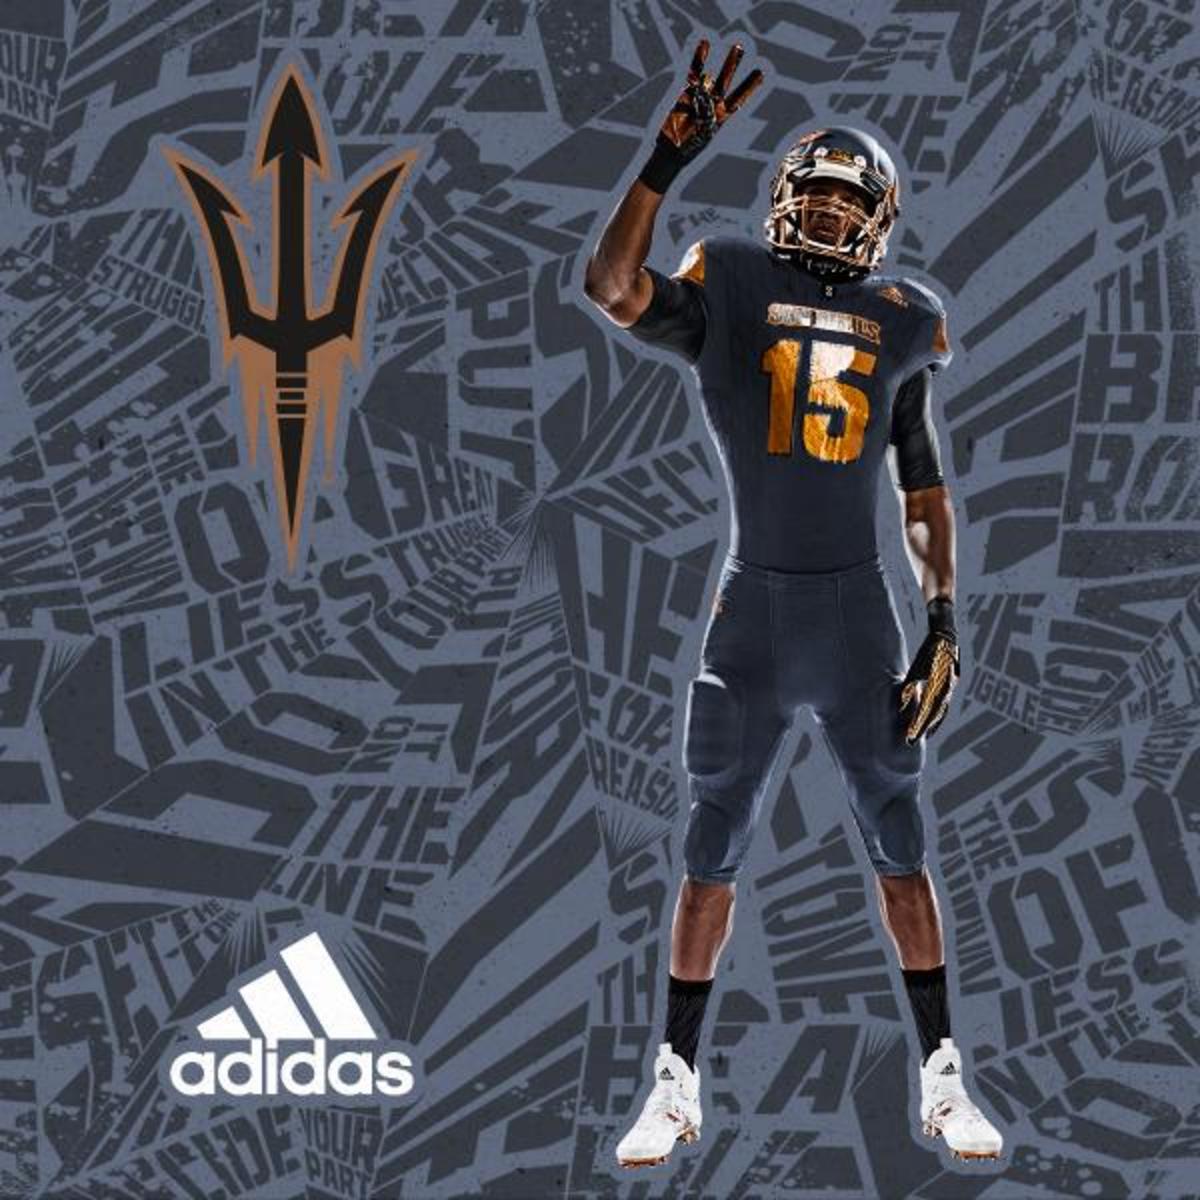 Arizona State unveils new gray uniforms Footballscoop